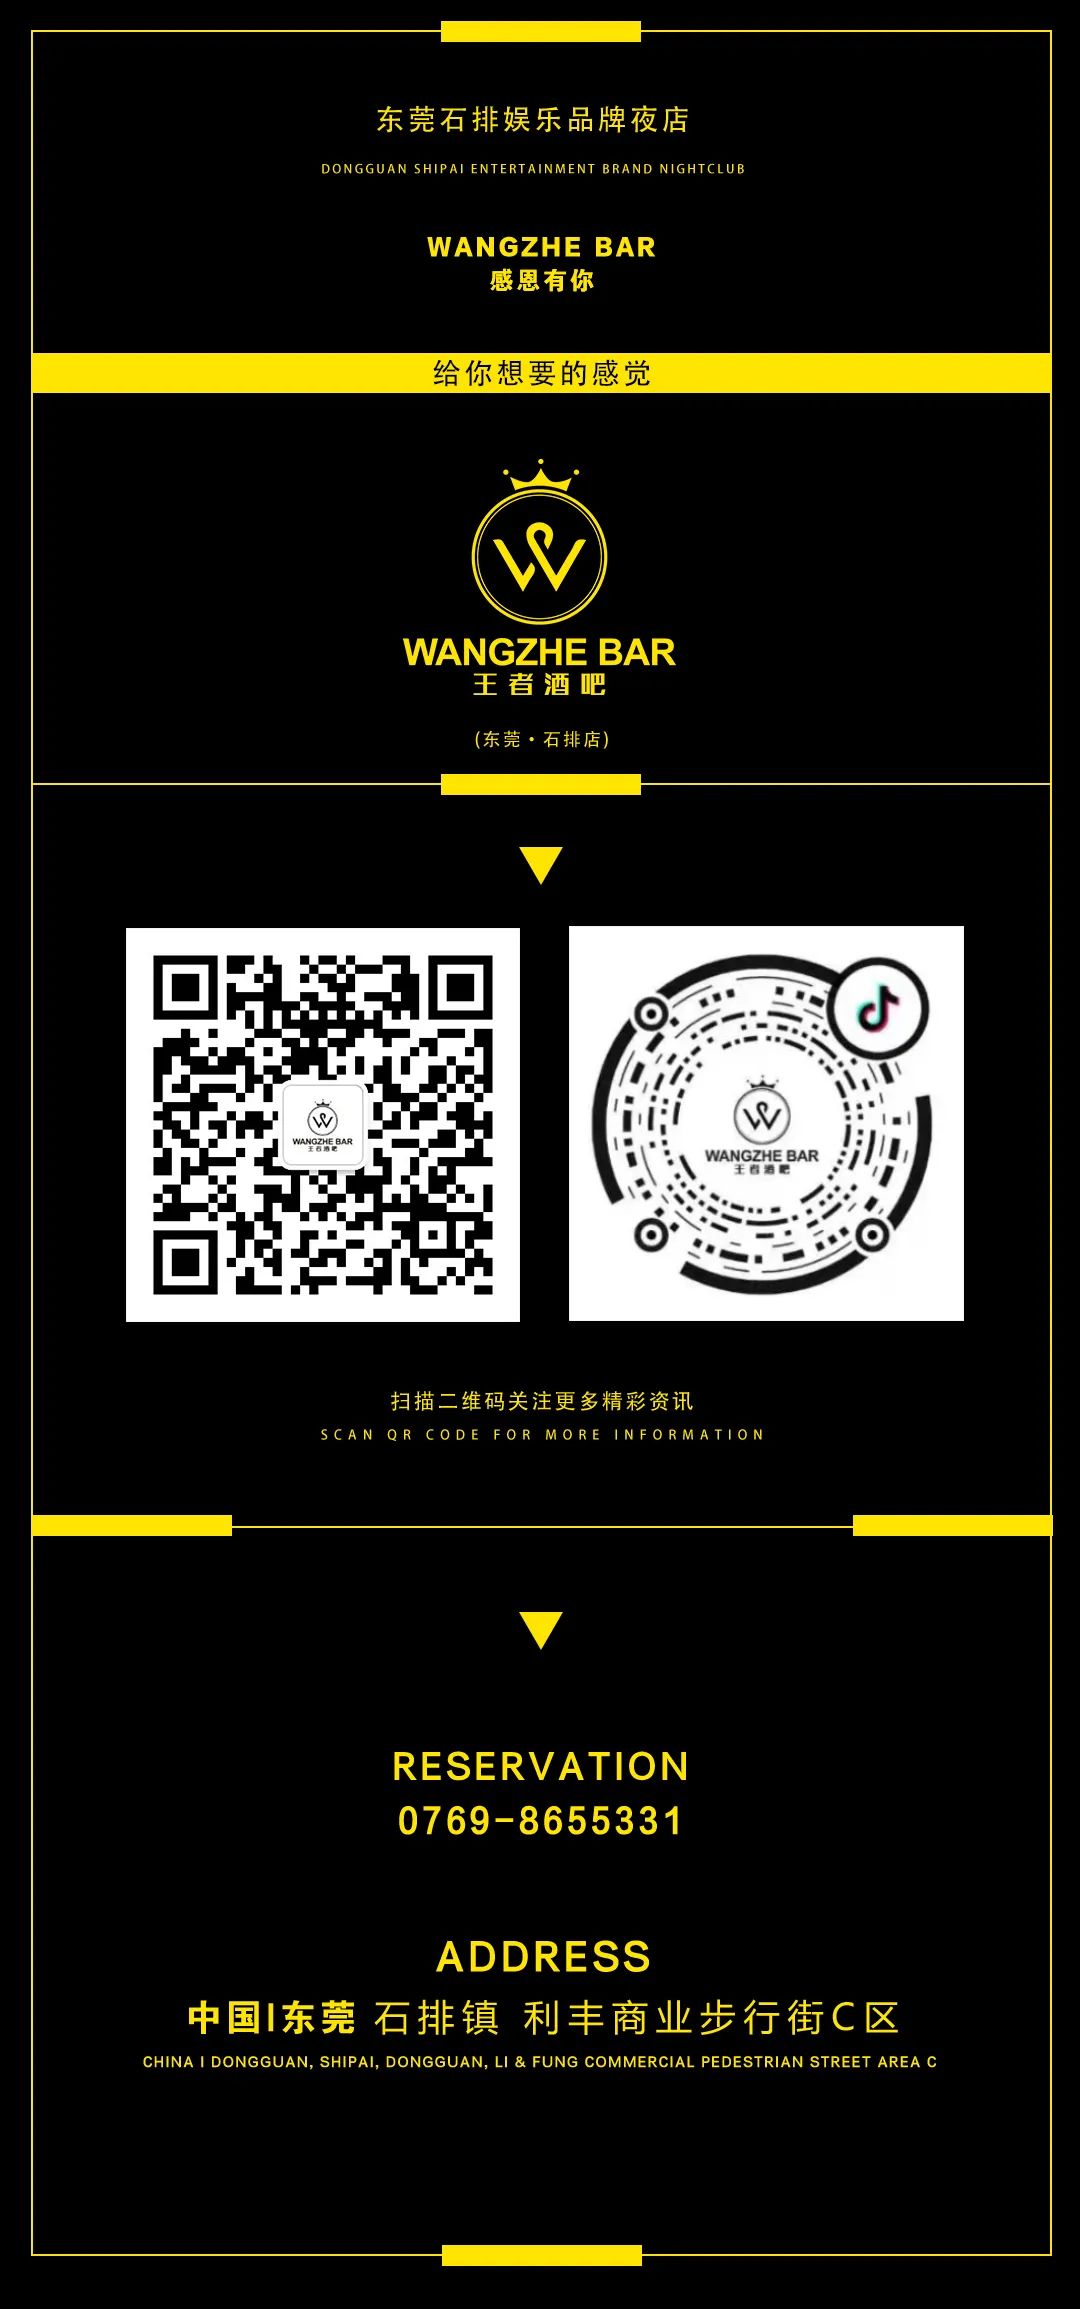 【WANGZHE BAR】品牌合作 × 跨界联盟，赋能品牌无限可能-石排王锗酒吧/WANGZHE BAR